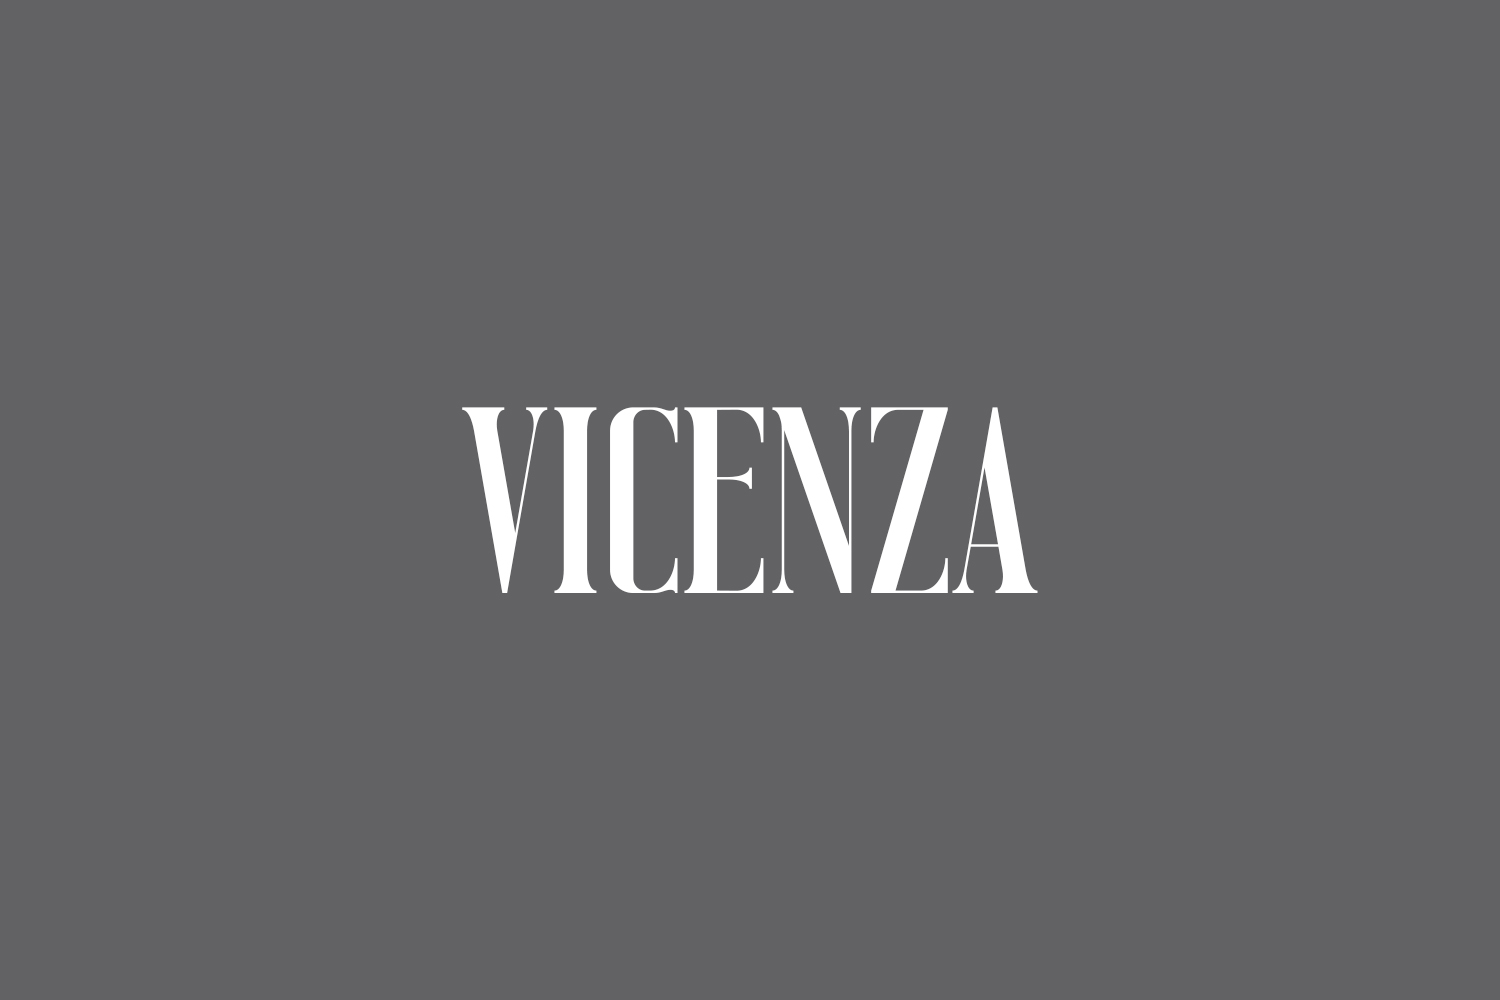 Vicenza Free Font